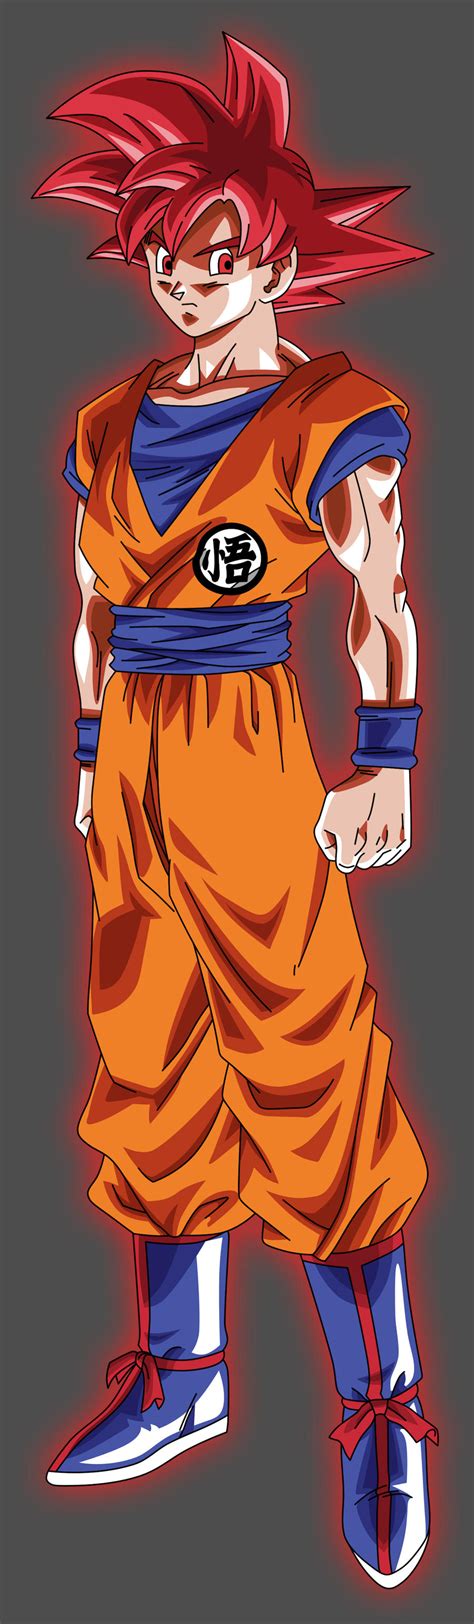 Goku Super Saiyan God From Battle Of Gods By Jordanxyrho On Deviantart